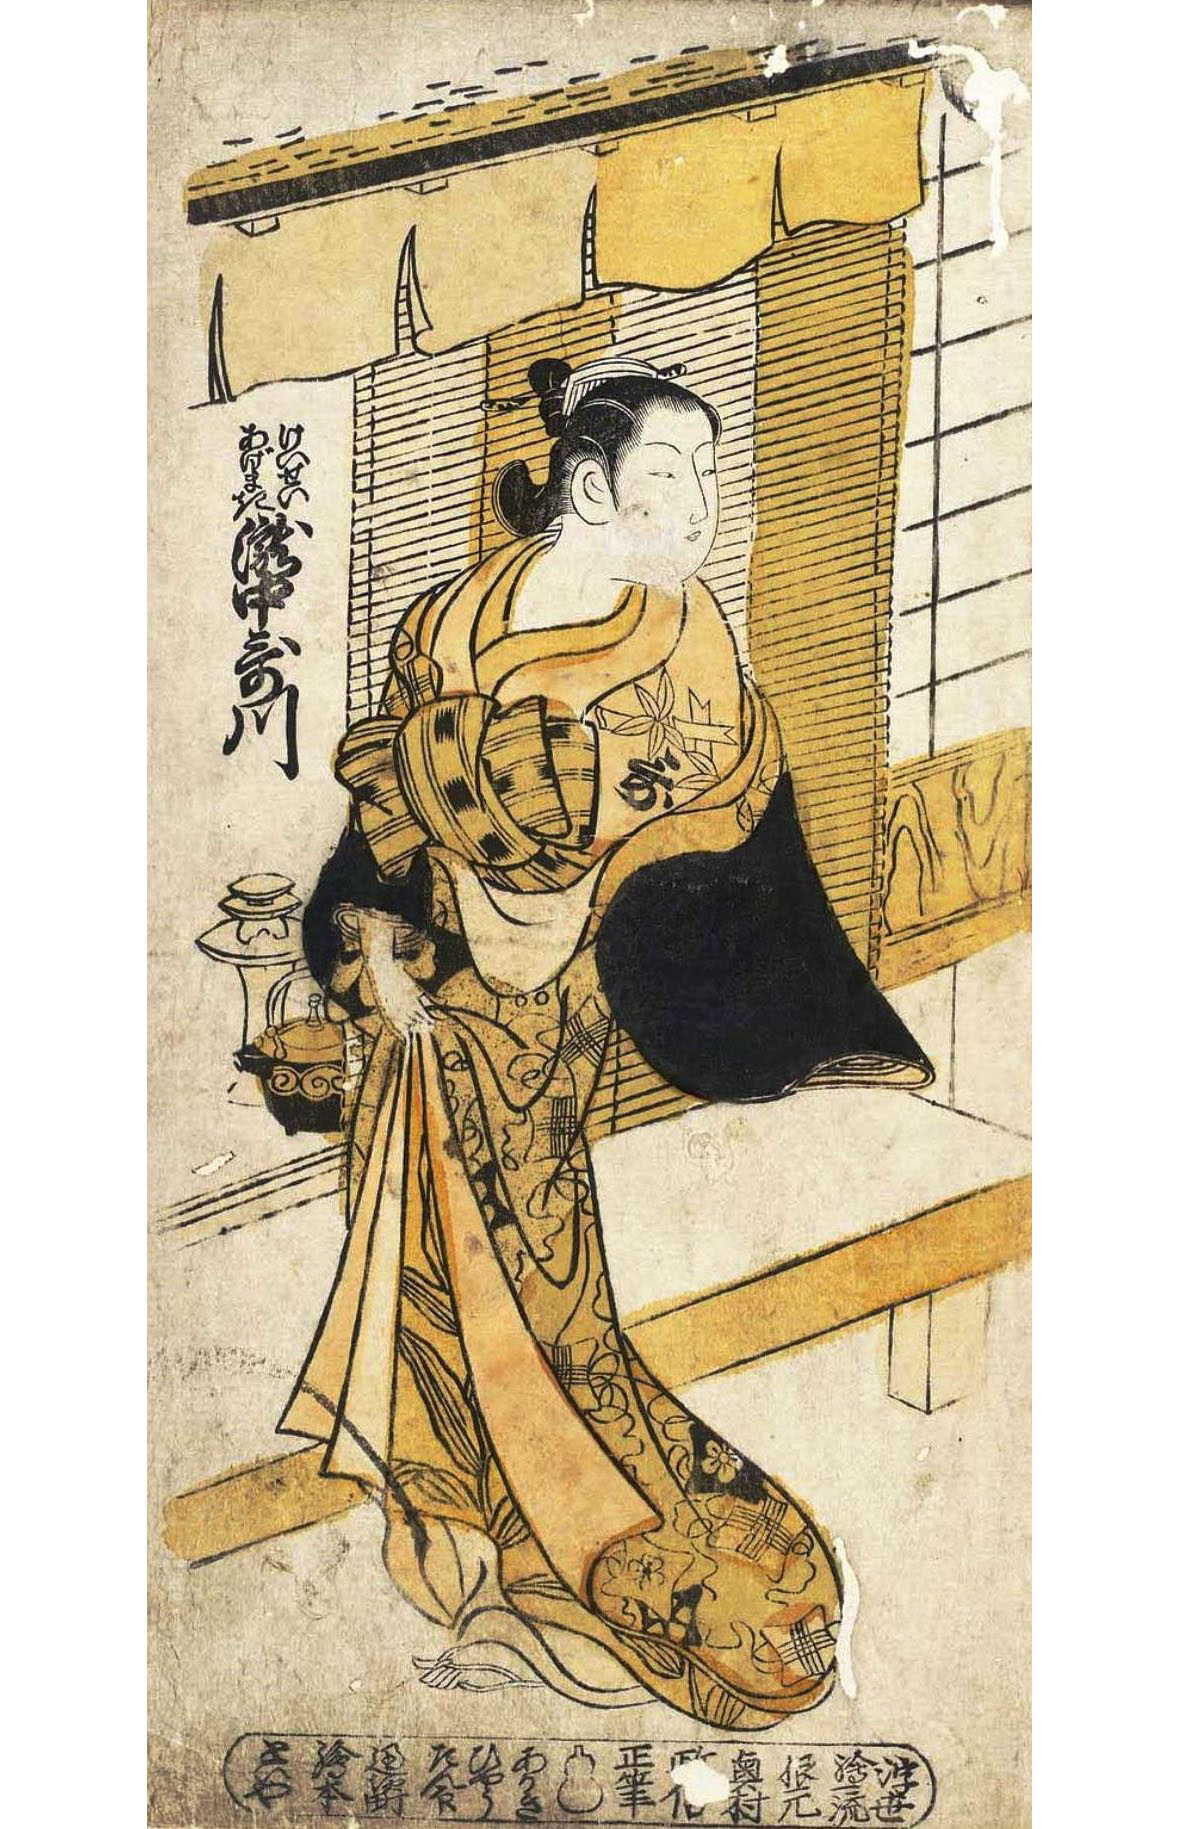 Окумура Масанобу. "Актёр Такинака Утагава в роли куртизанки". Около 1740.